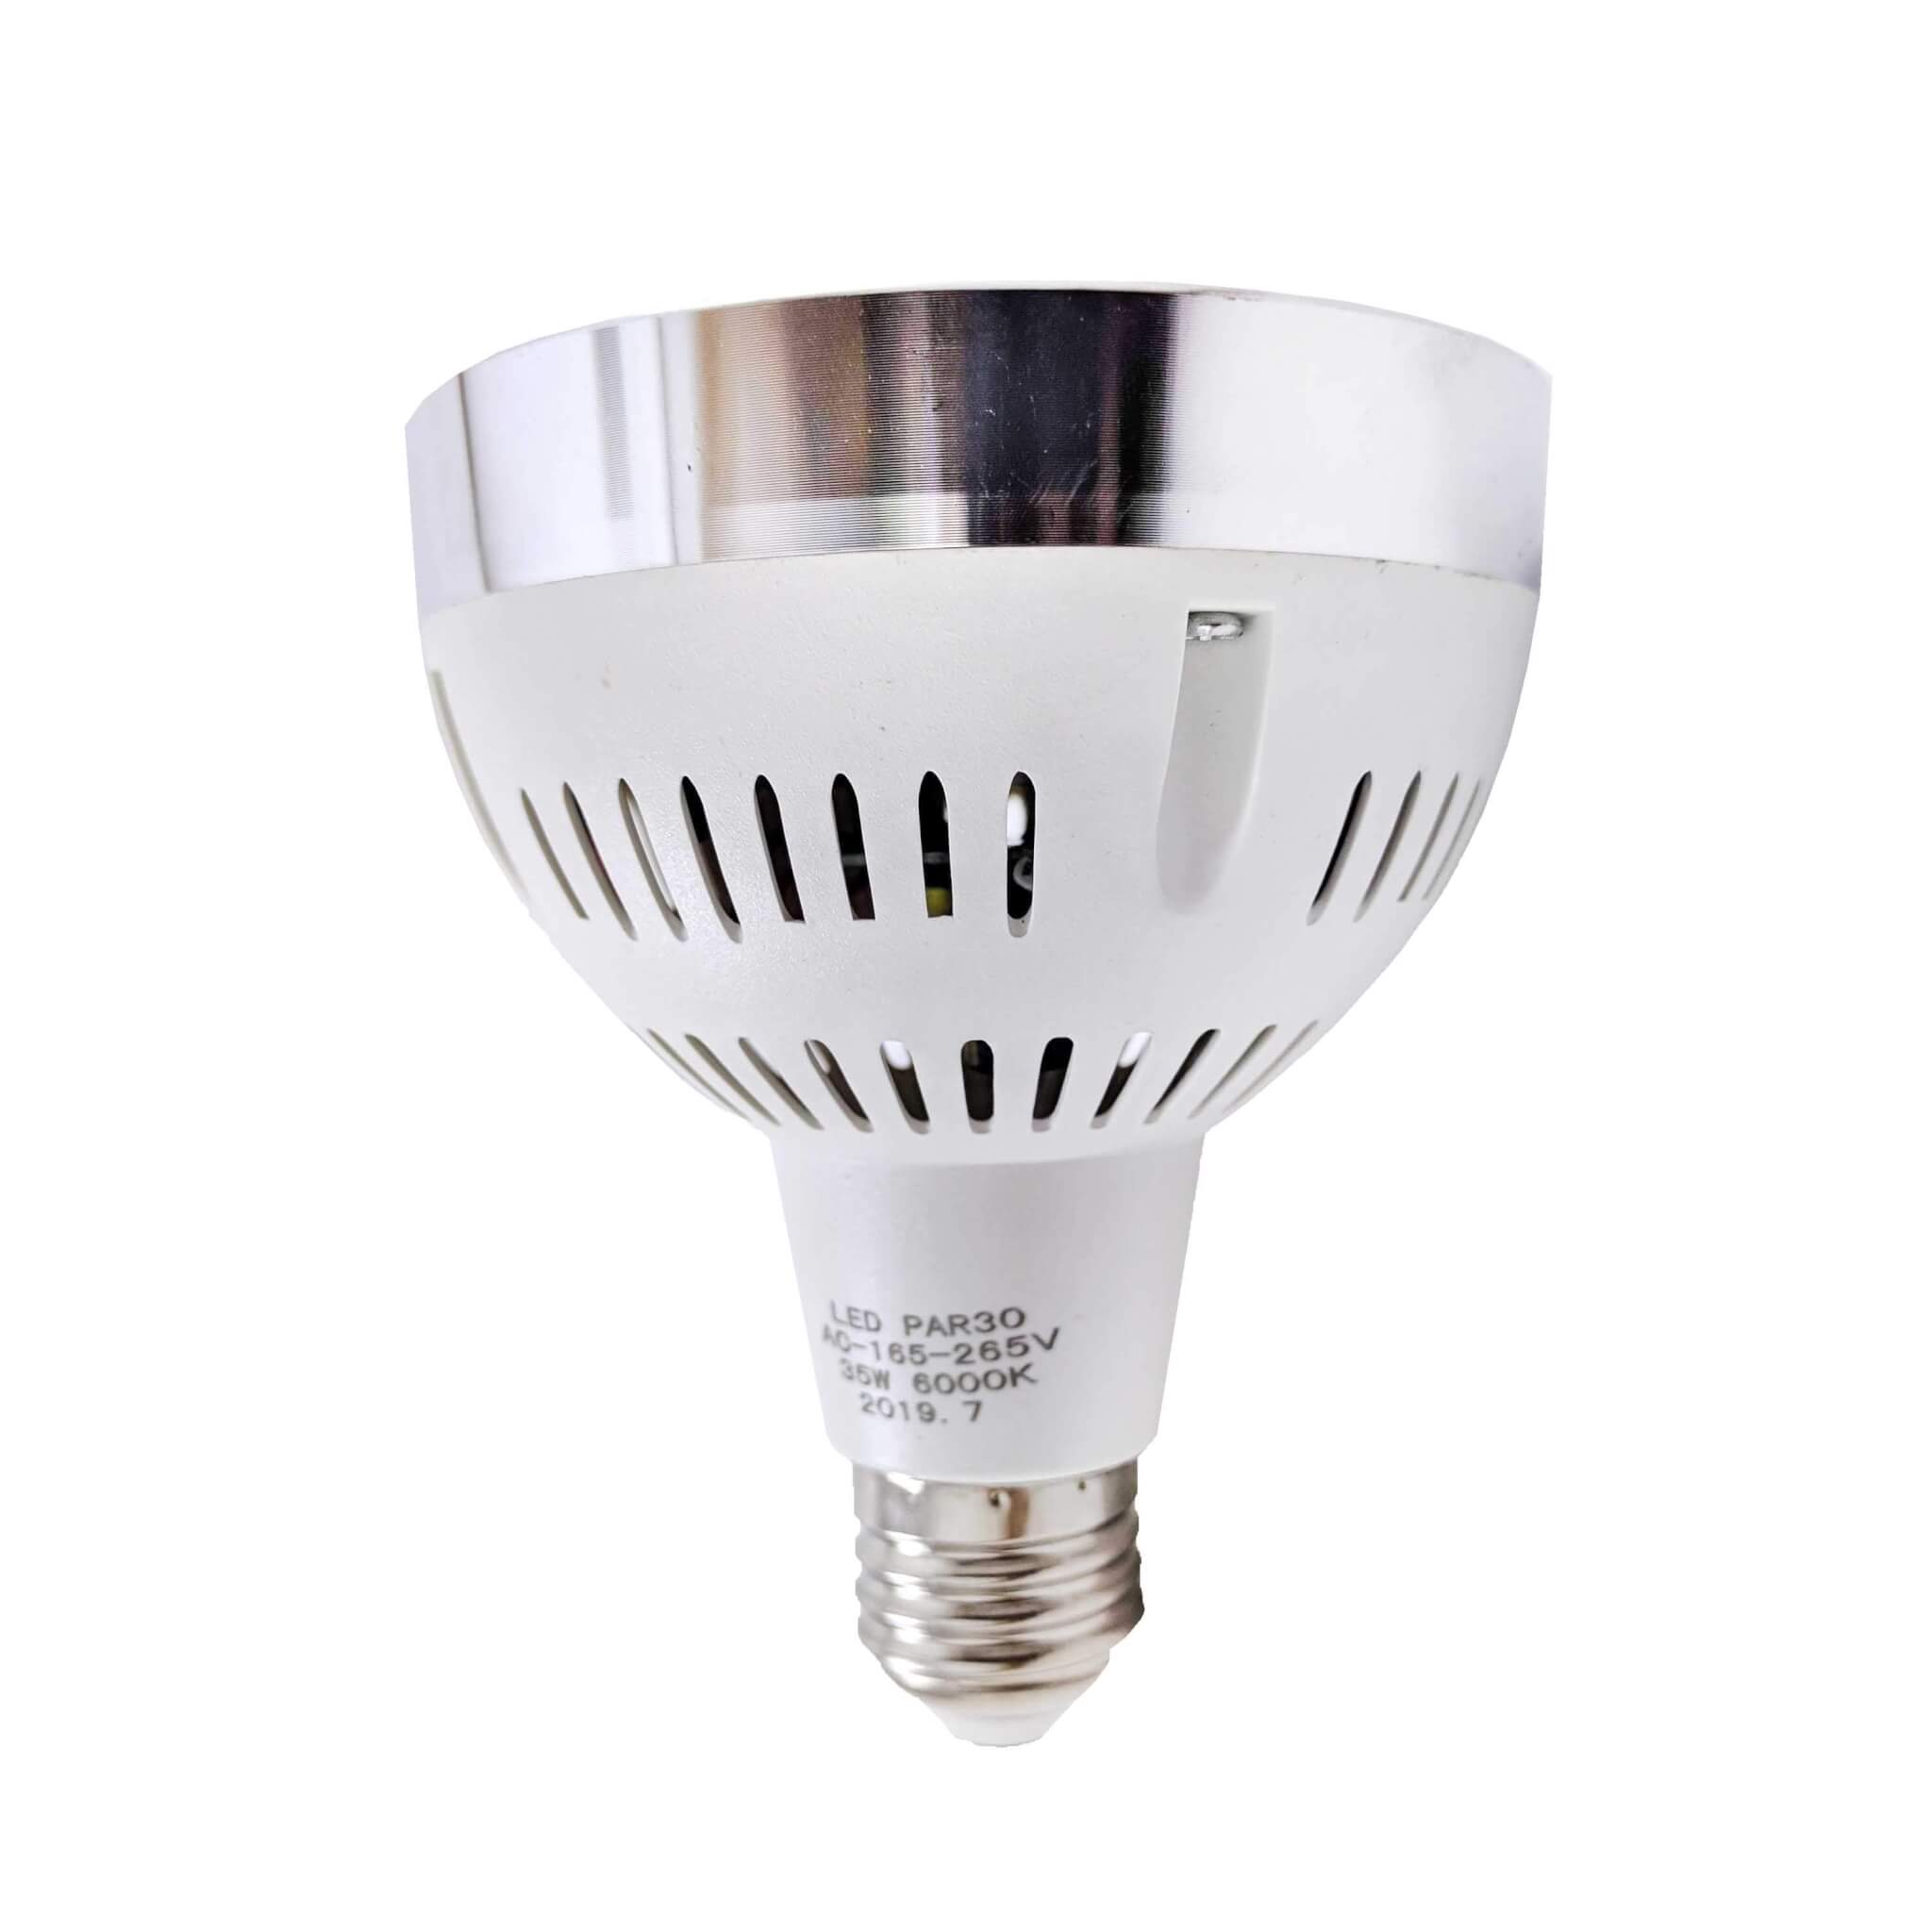 A1 LED Spot Light 35W E27 Daylight - Quincaillerie A1's Online Hardware  Store